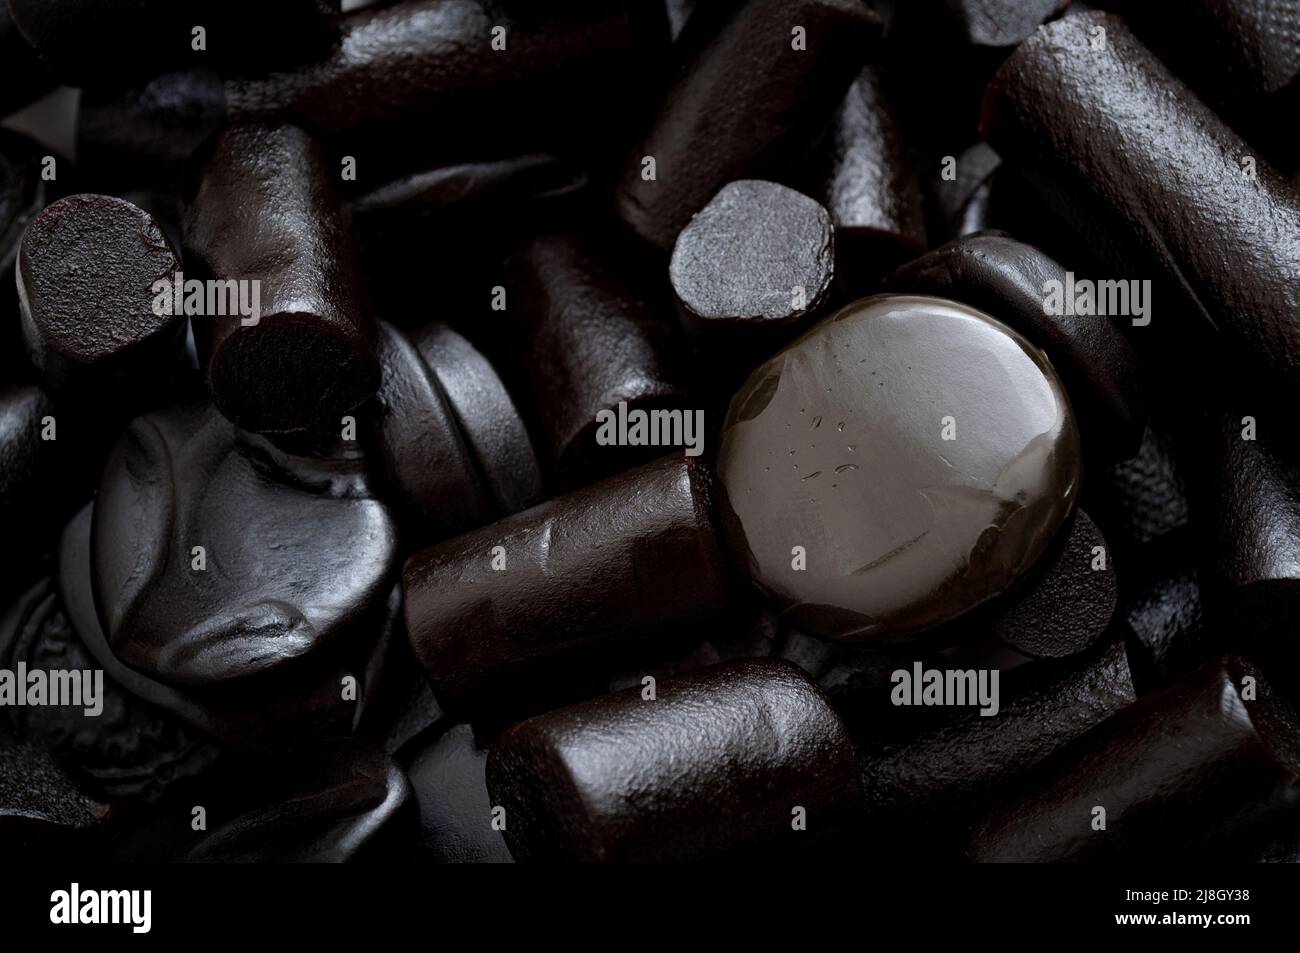 Confitería a base de azúcar y dulce concepto de dulces con cerca de un montón de regaliz negro Foto de stock